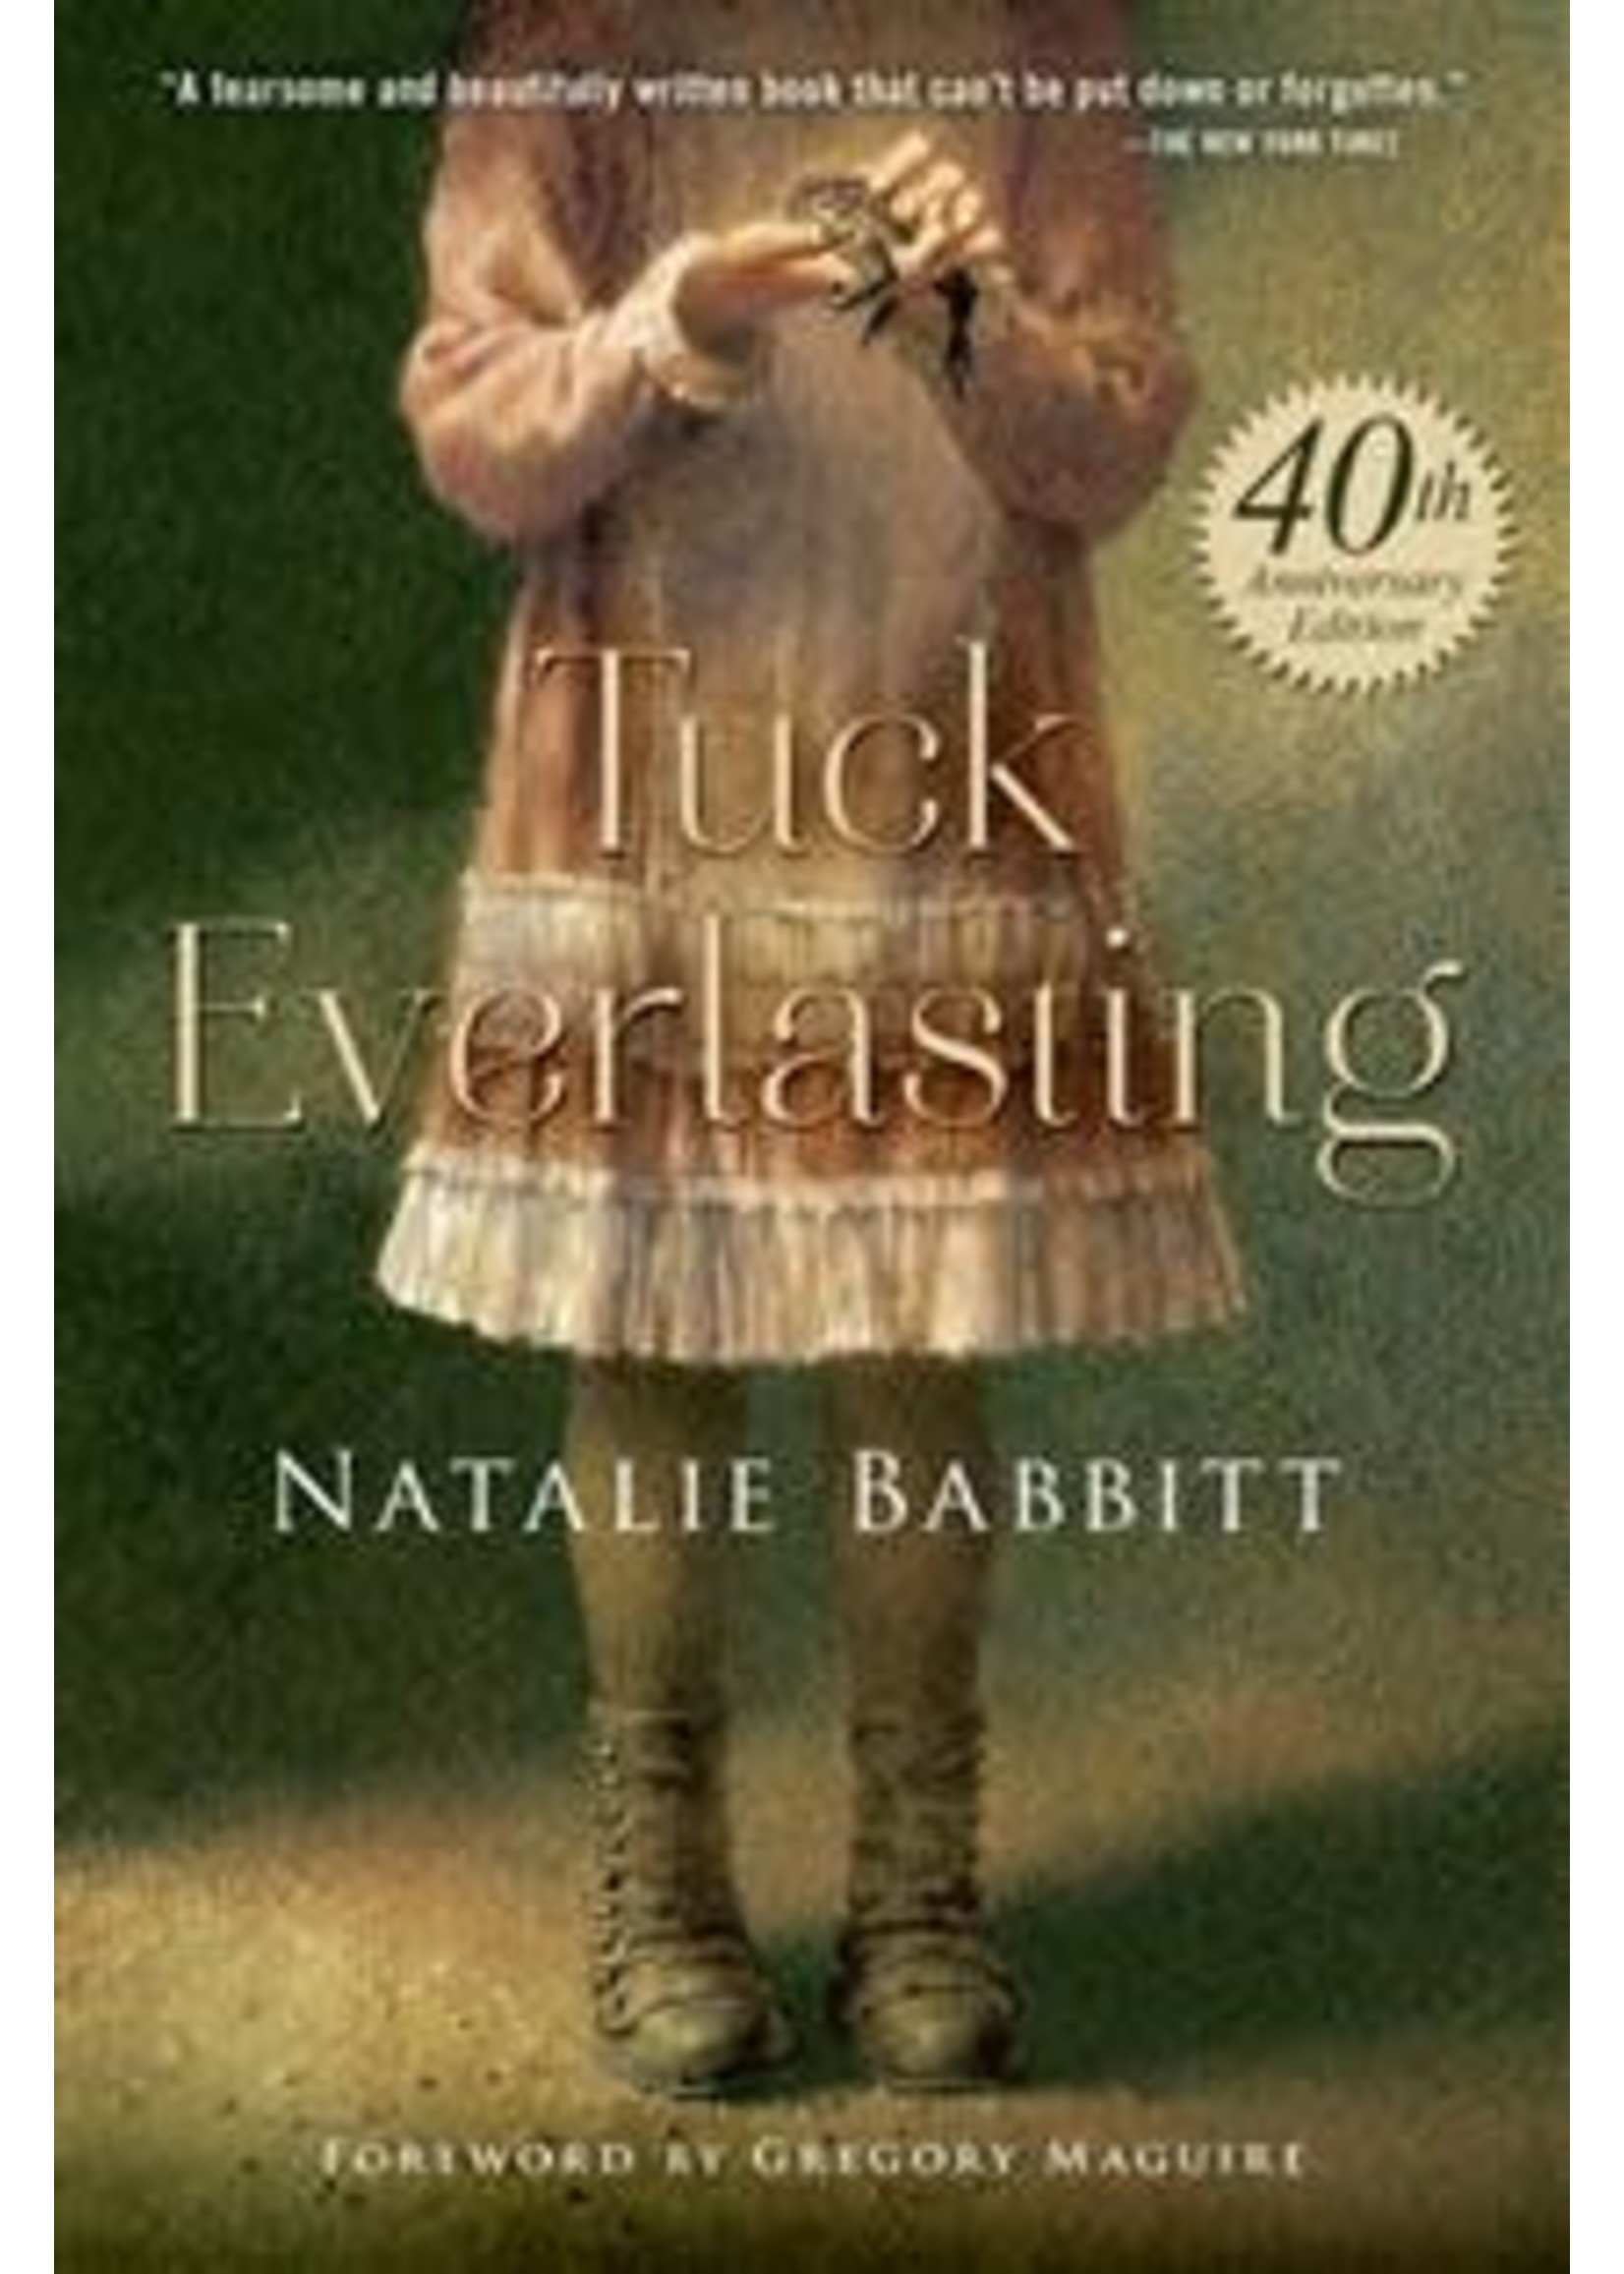 Tuck Everlasting: 40th Anniversary Edition by Natalie Babbitt